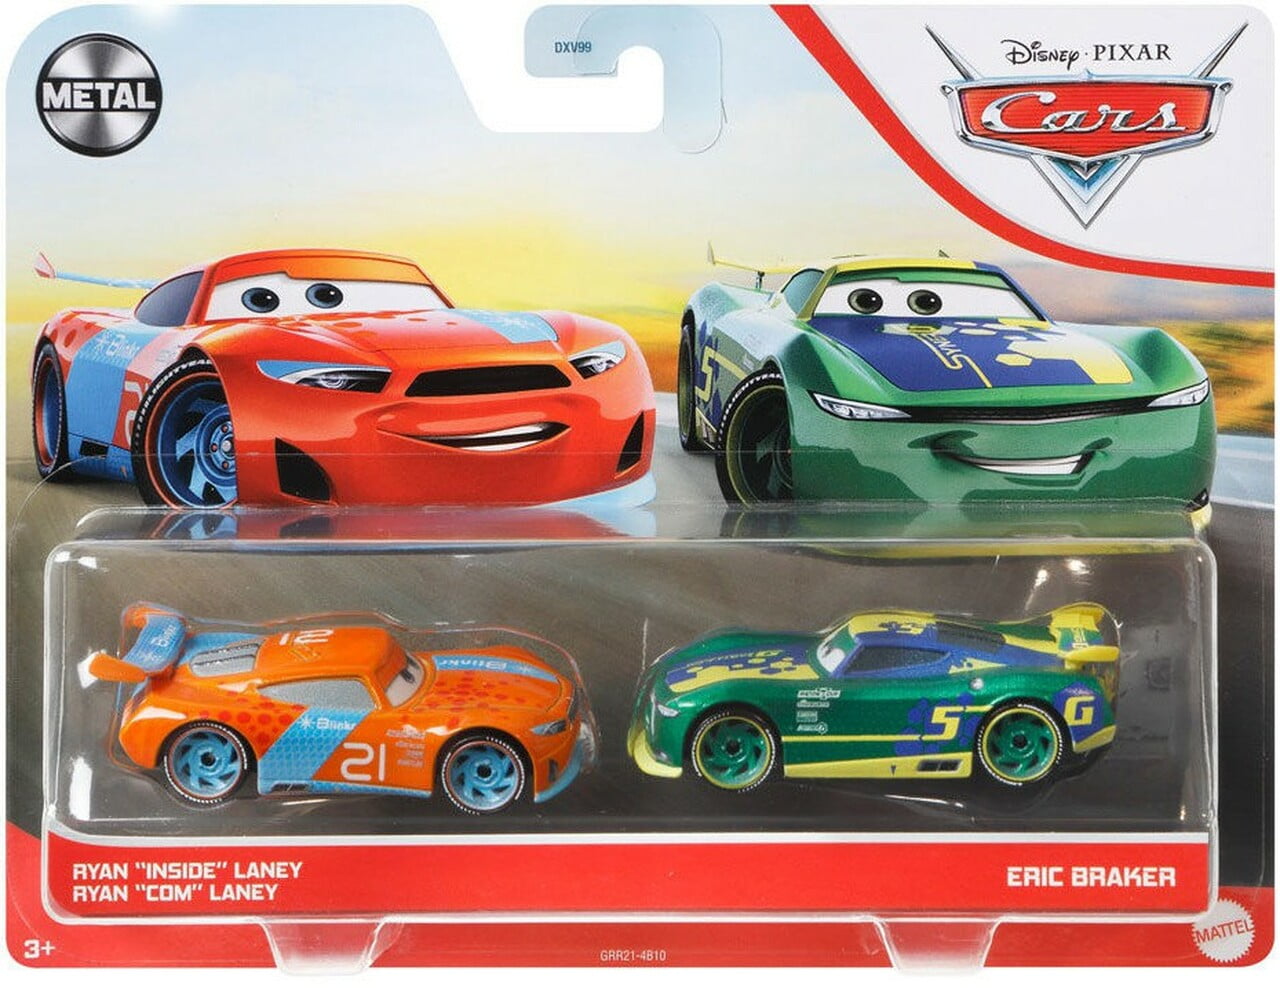 Disney and Pixar Cars 3 2-Pack Assortment, 1:55 scale Fan Favorite